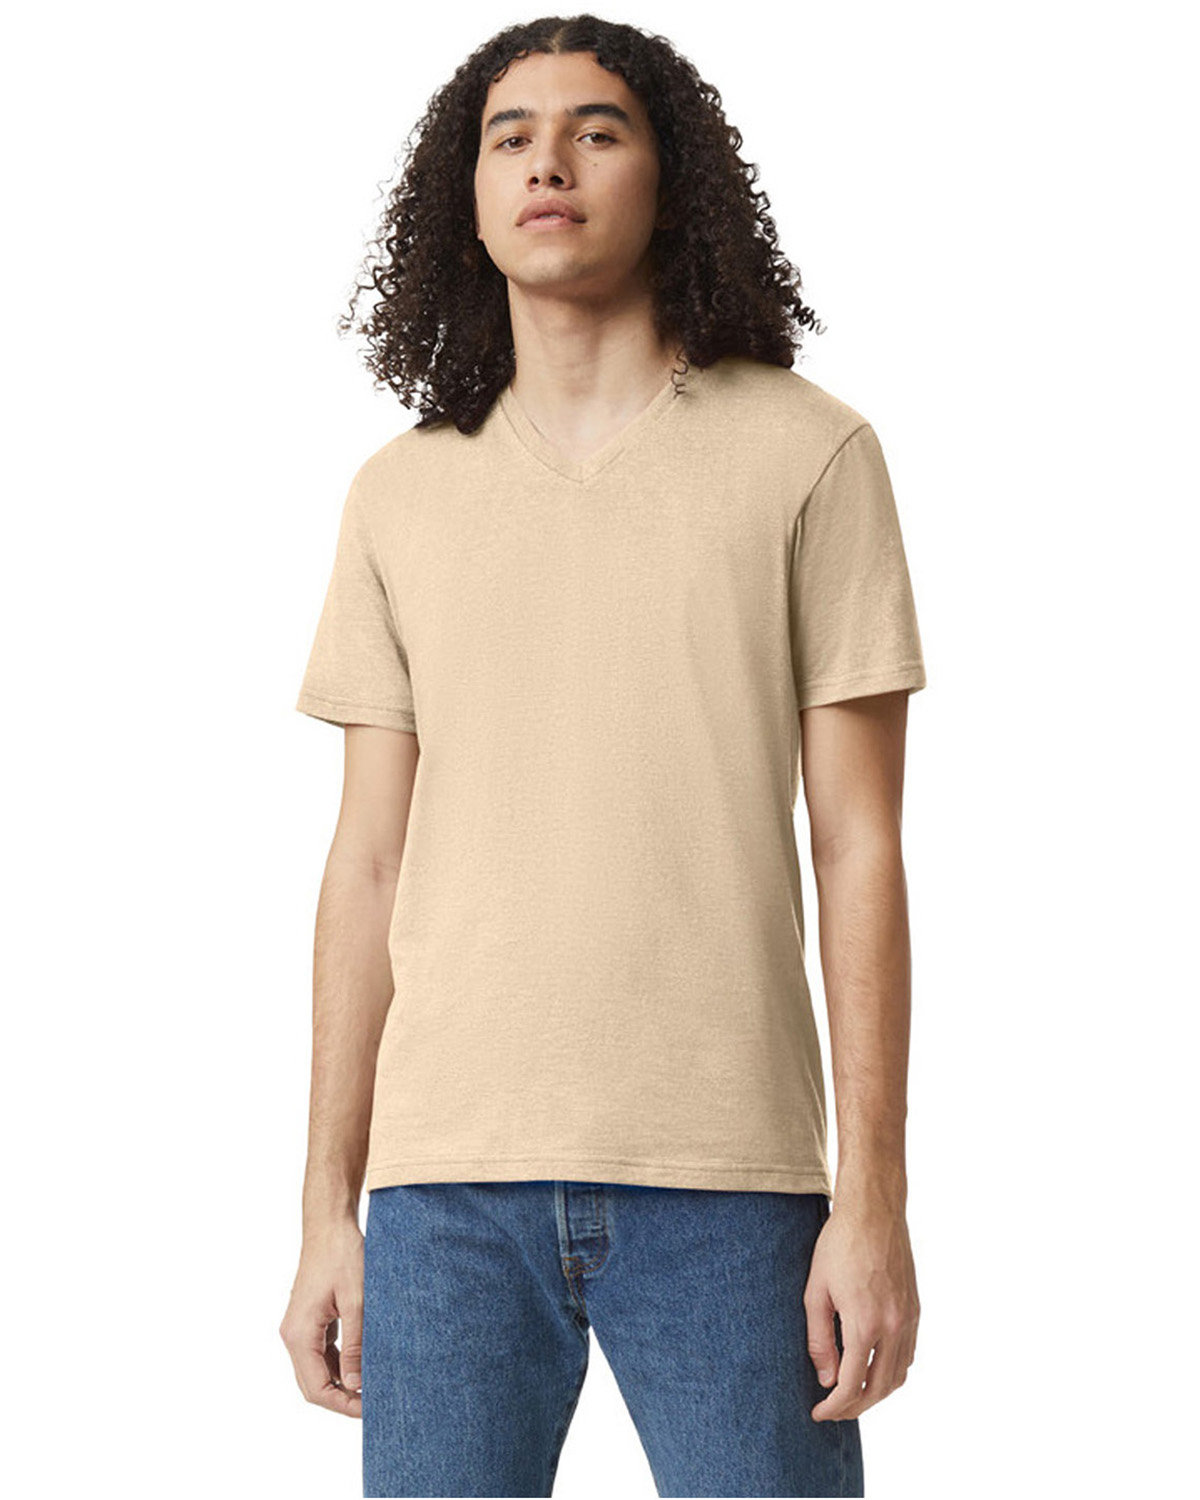 American Apparel Unisex CVC V-Neck T-Shirt HEATHER BONE 